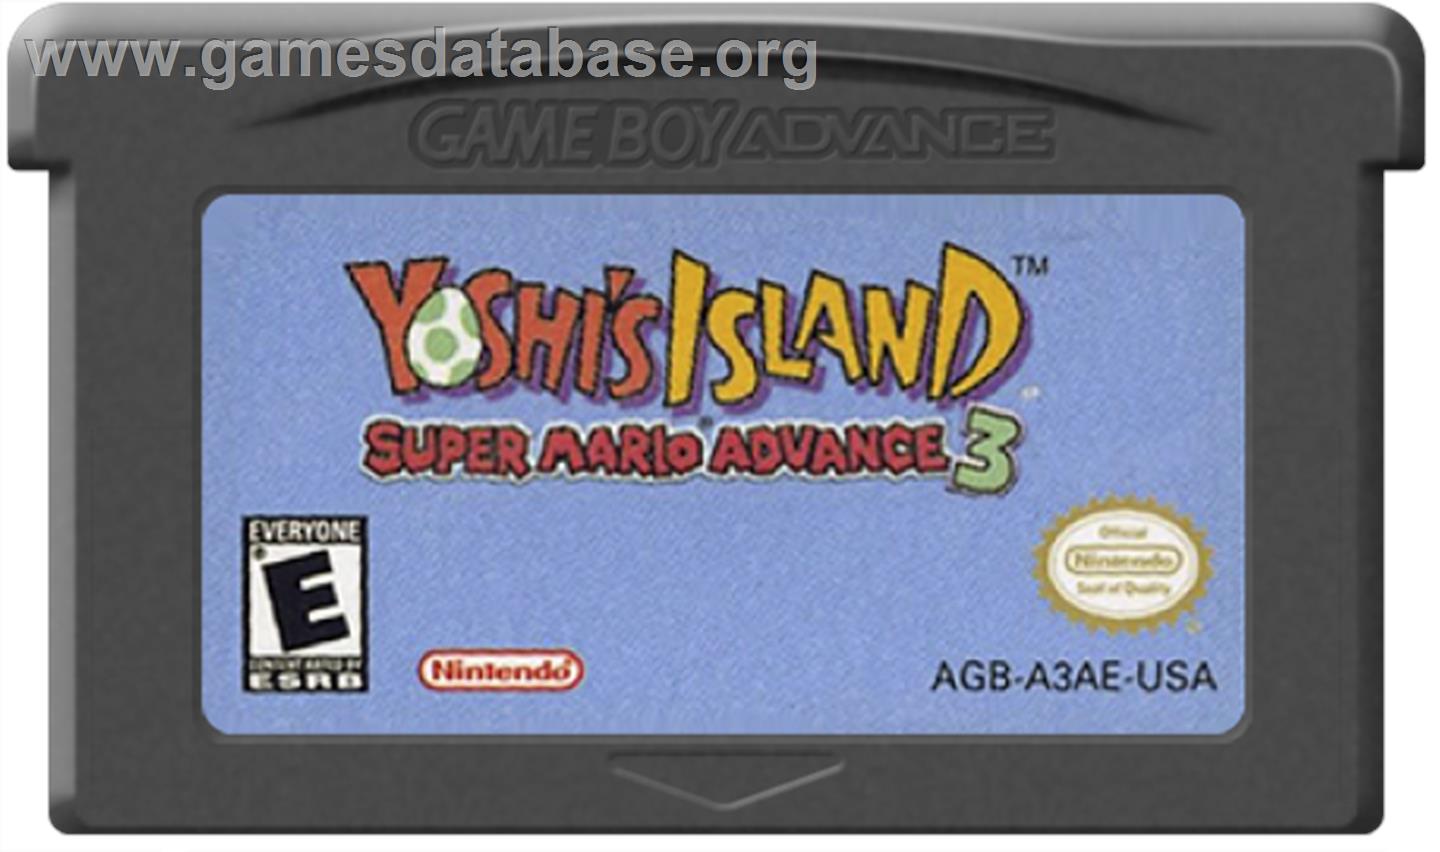 Yoshi's Island: Super Mario Advance 3 - Nintendo Game Boy Advance - Artwork - Cartridge